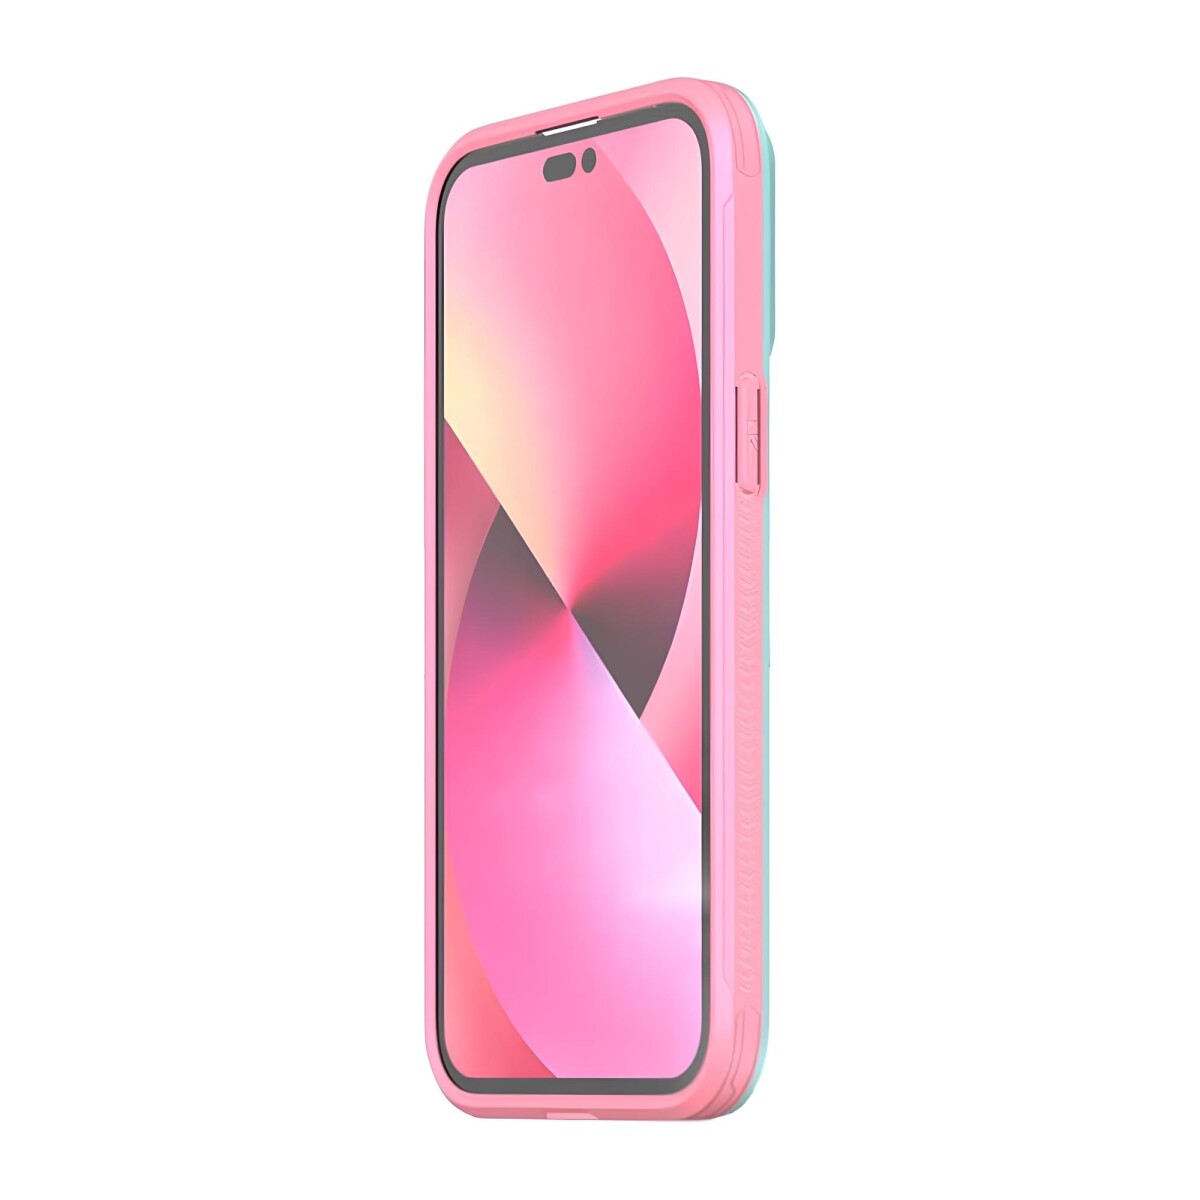 Protector Case con Protector de Cámara Slide para iPhone 11 Sky blue+pink